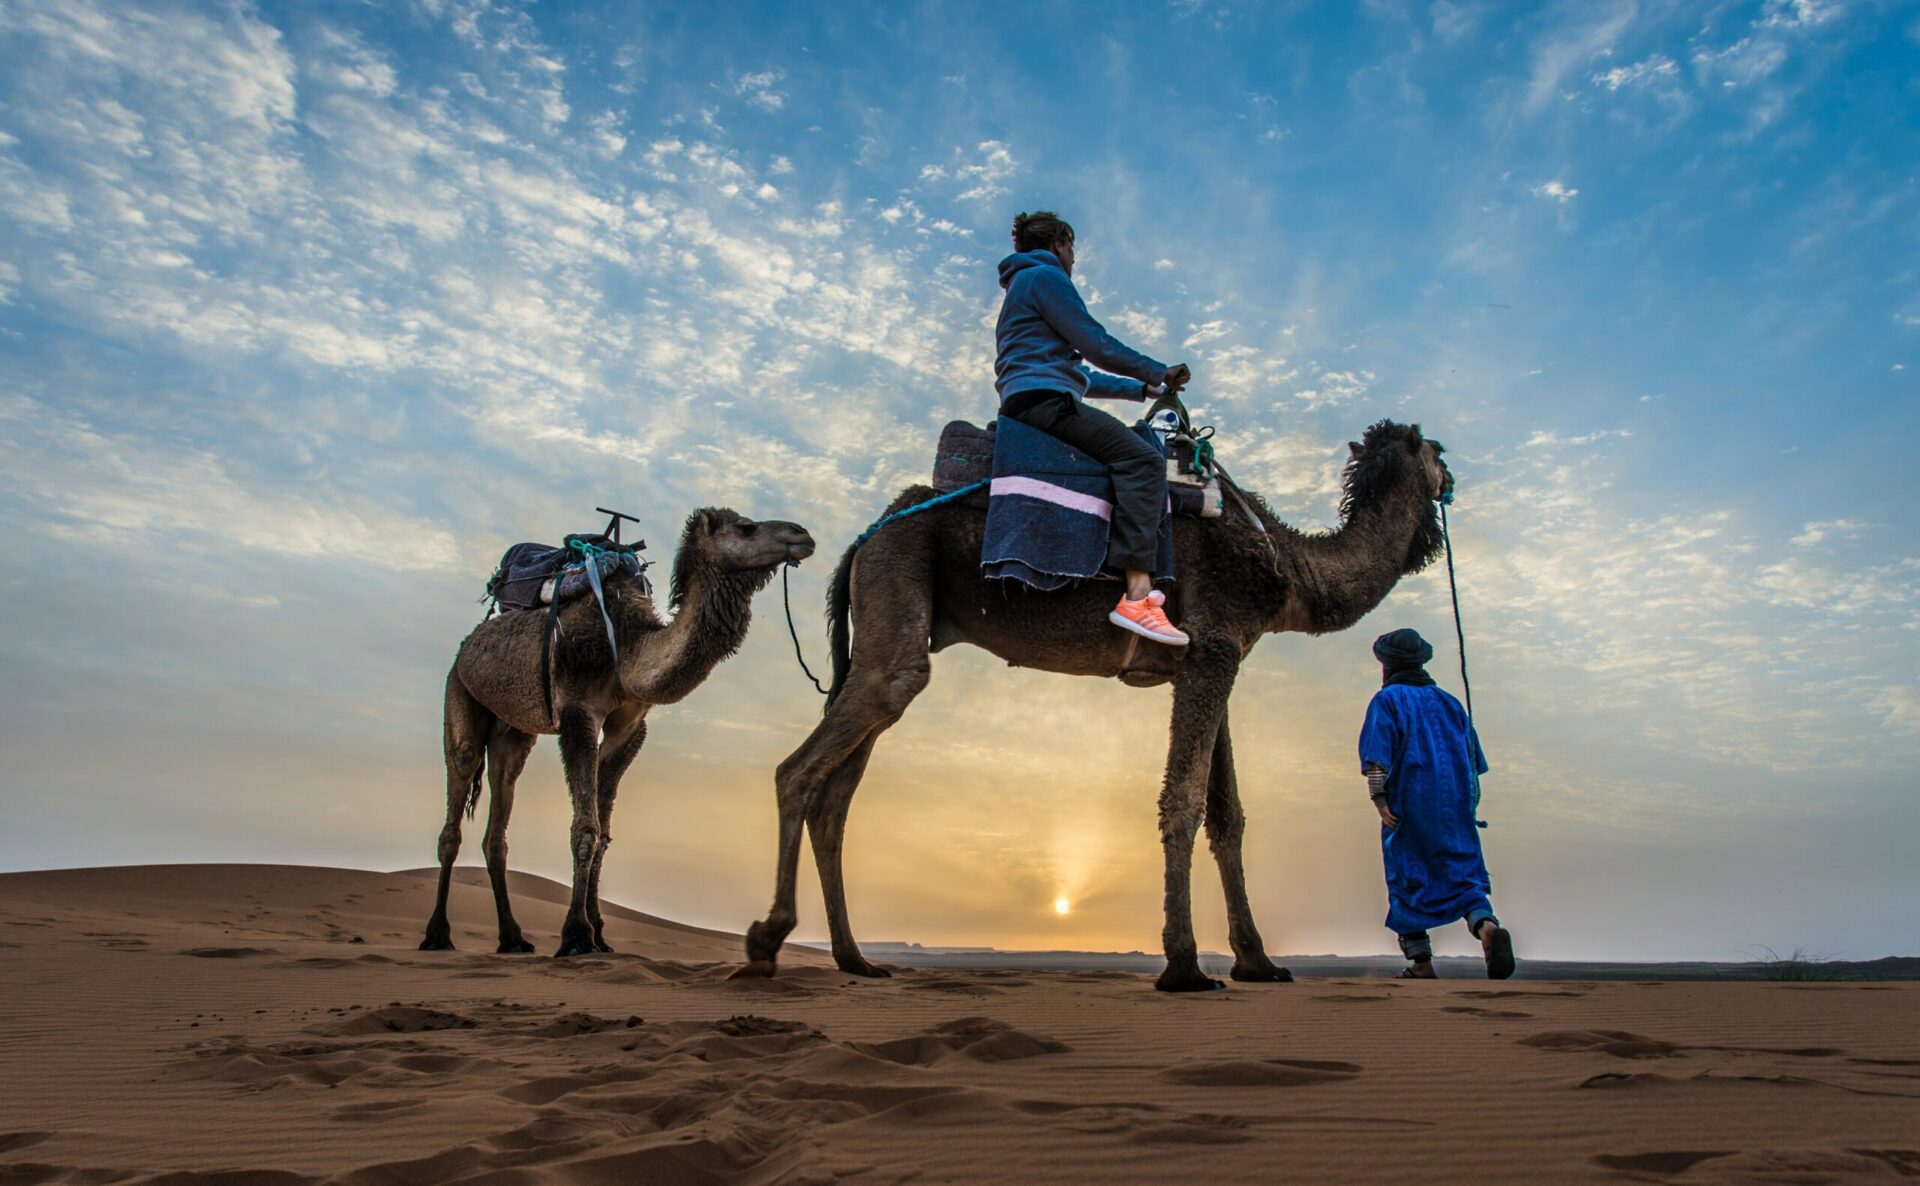 Gold Sand Camp, Moroccan Sahara